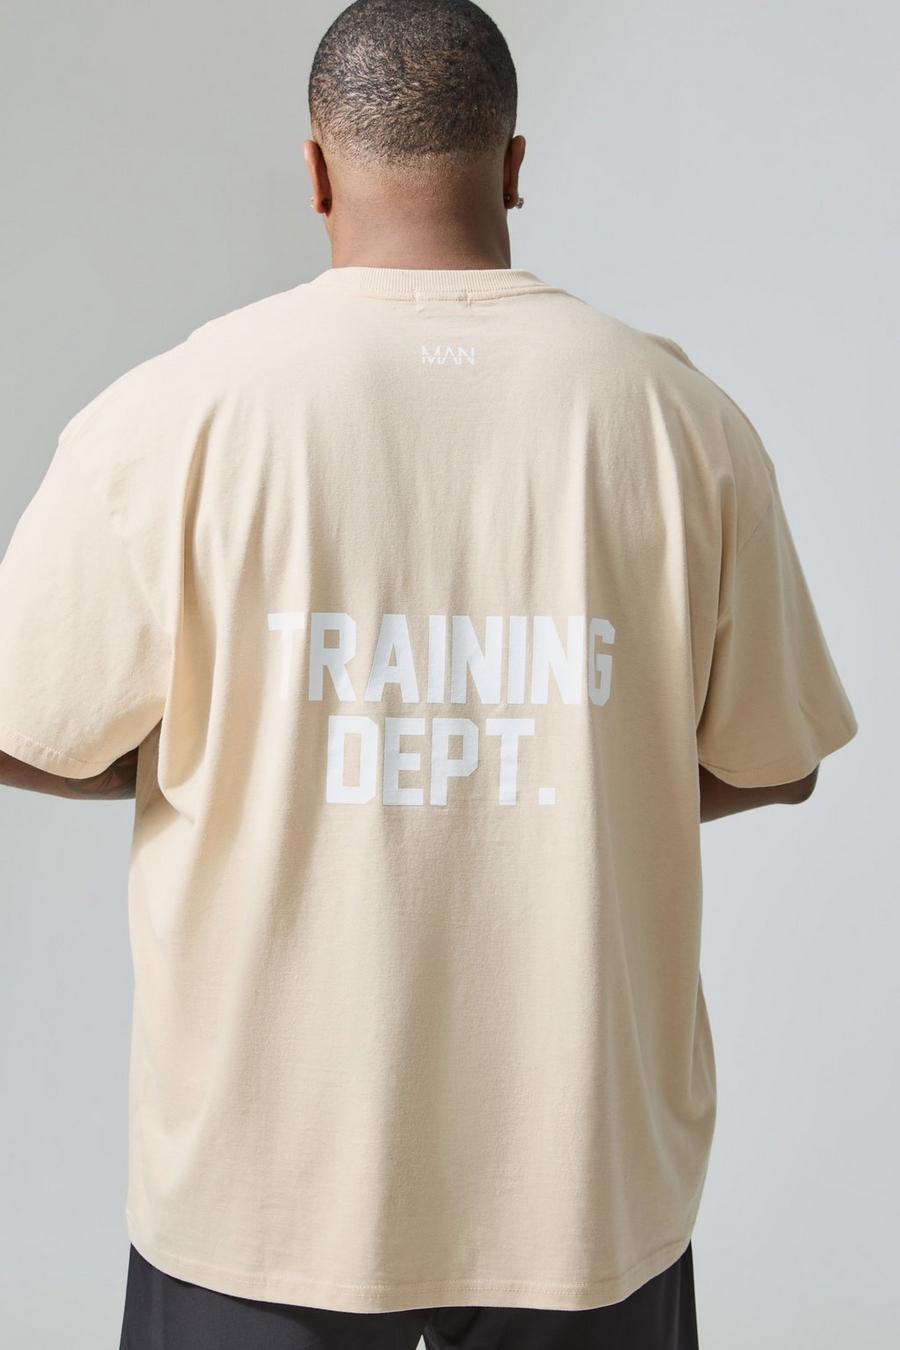 Plus Active Oversize T-Shirt mit Training Dept. Print, Sand